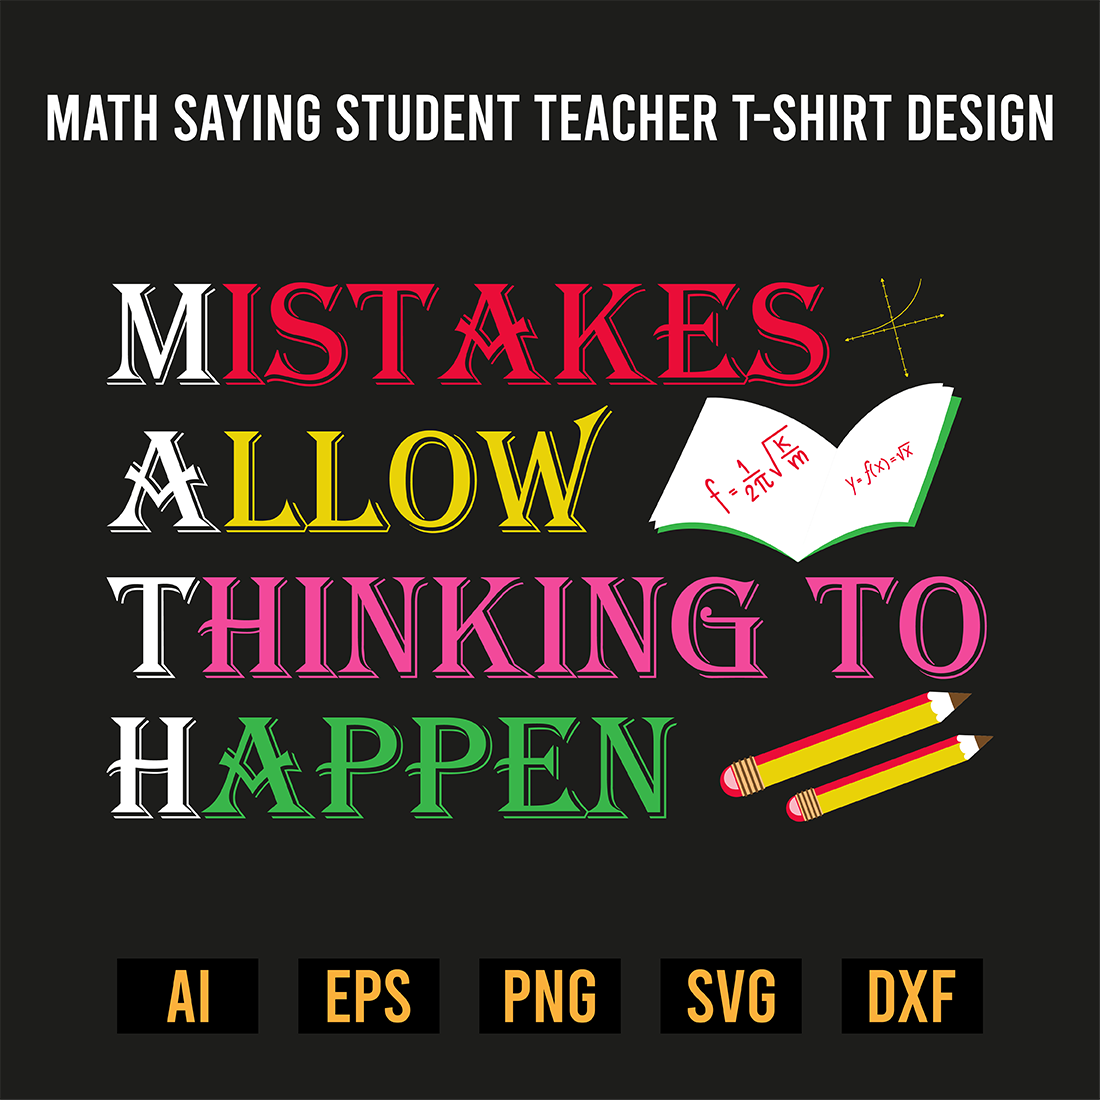 Math Saying Student Teacher T-Shirt Design image preview.